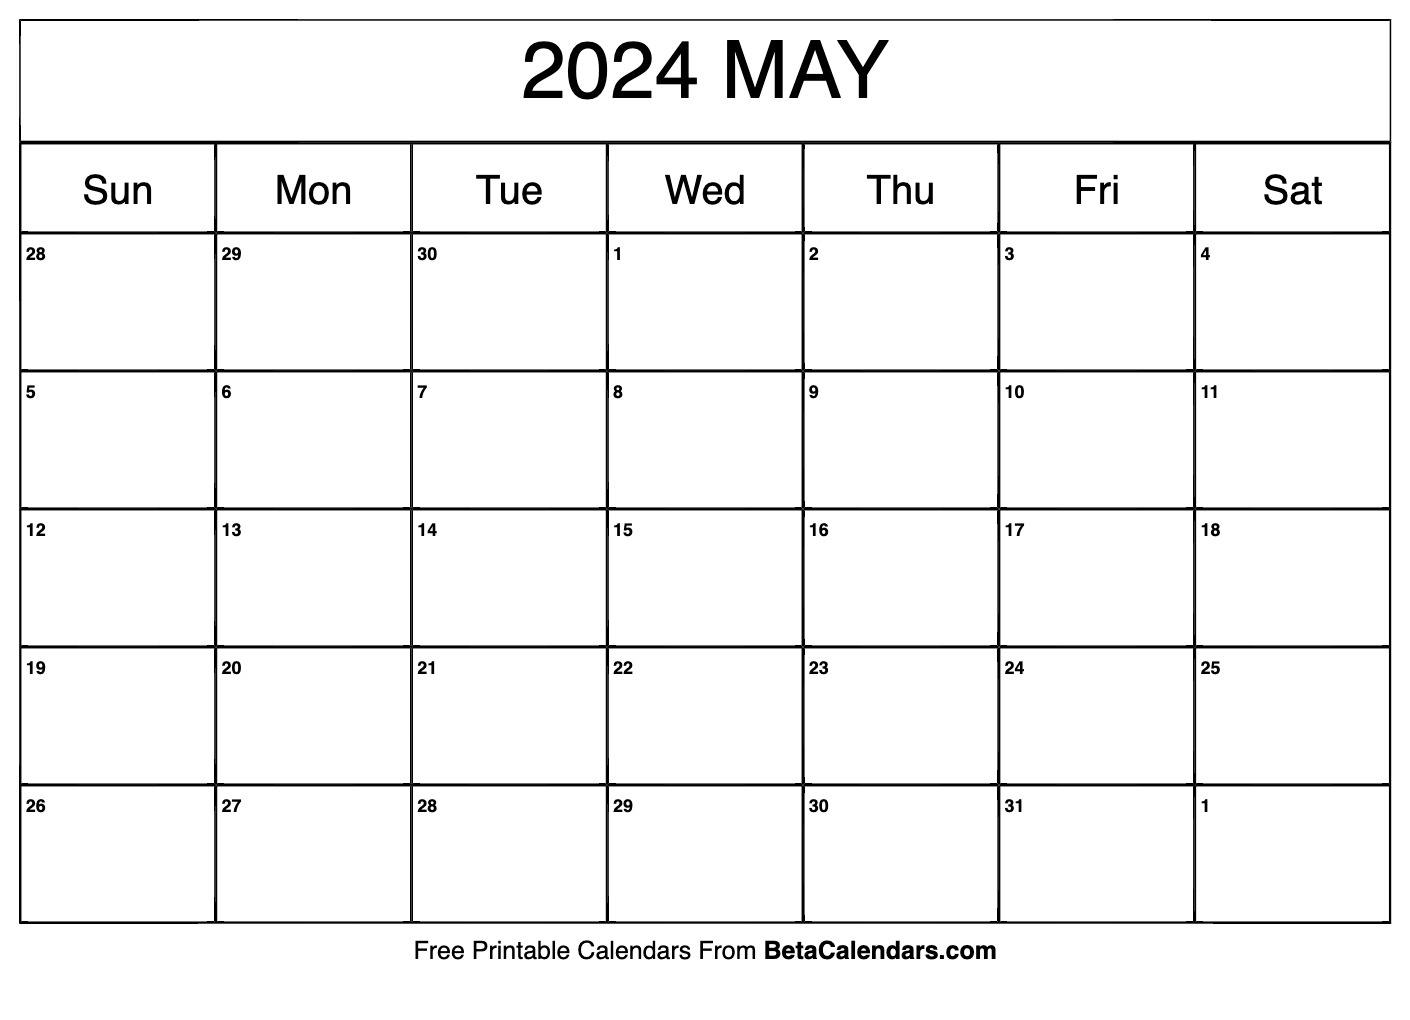 Free Printable May 2024 Calendar within Free Printable Calendar 2024 May Through December